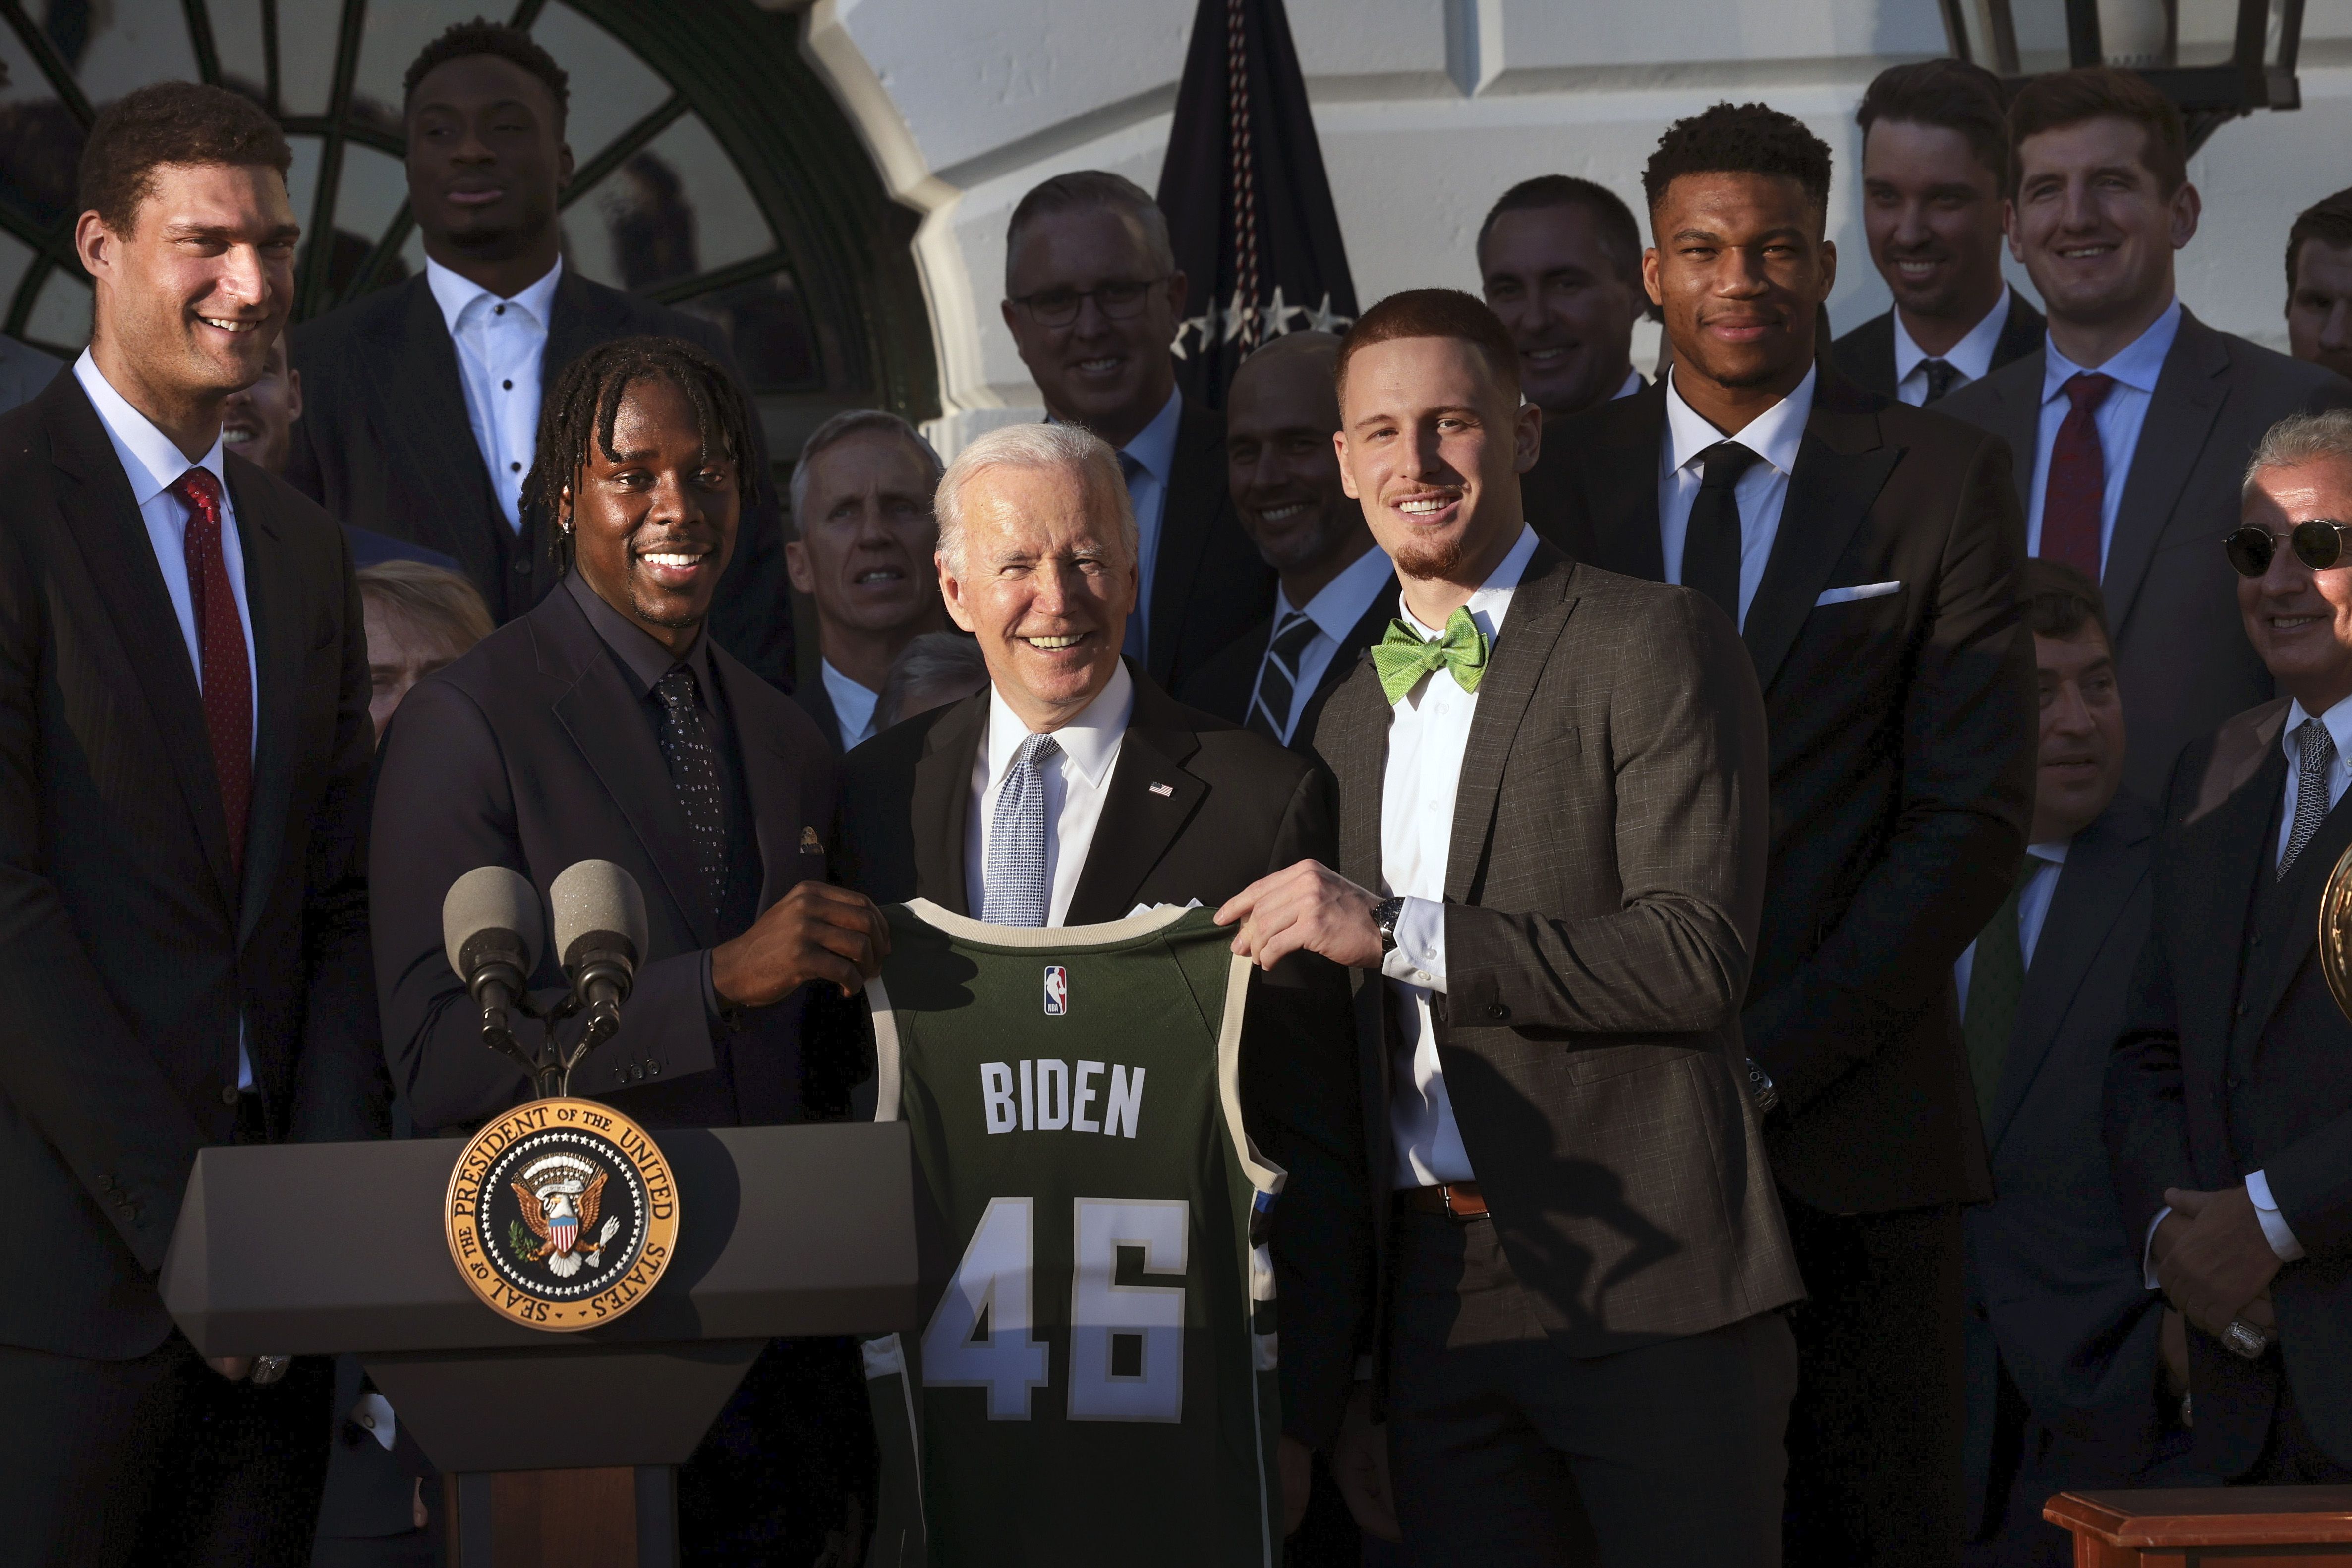 President Biden posing with his Bucks jersey